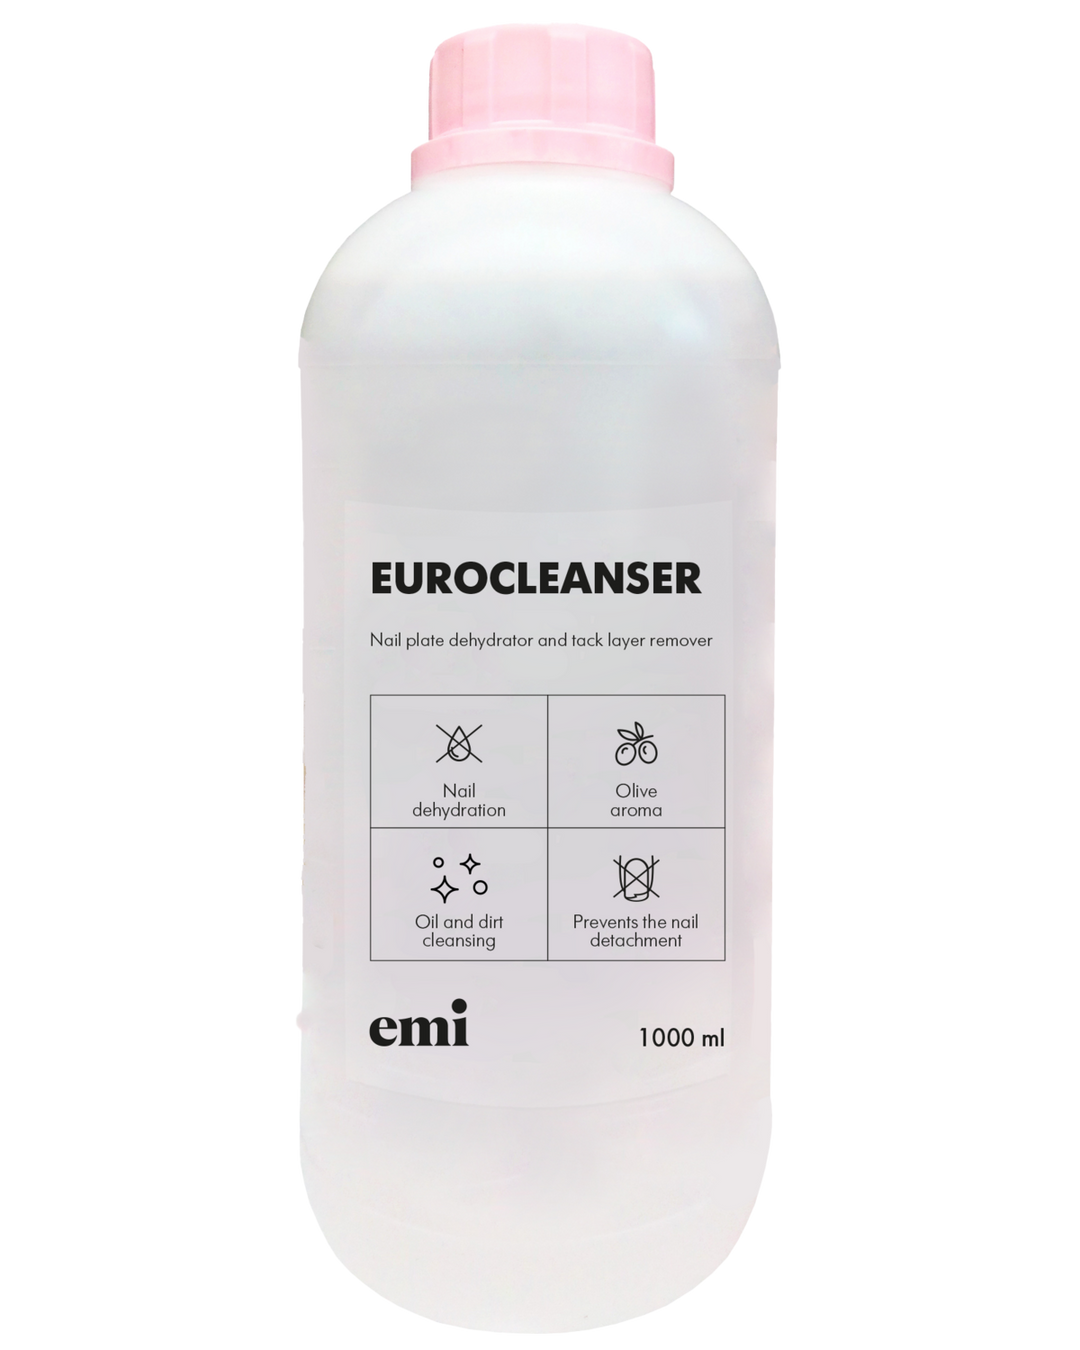 Eurocleanser LUX 200/1000 ml.